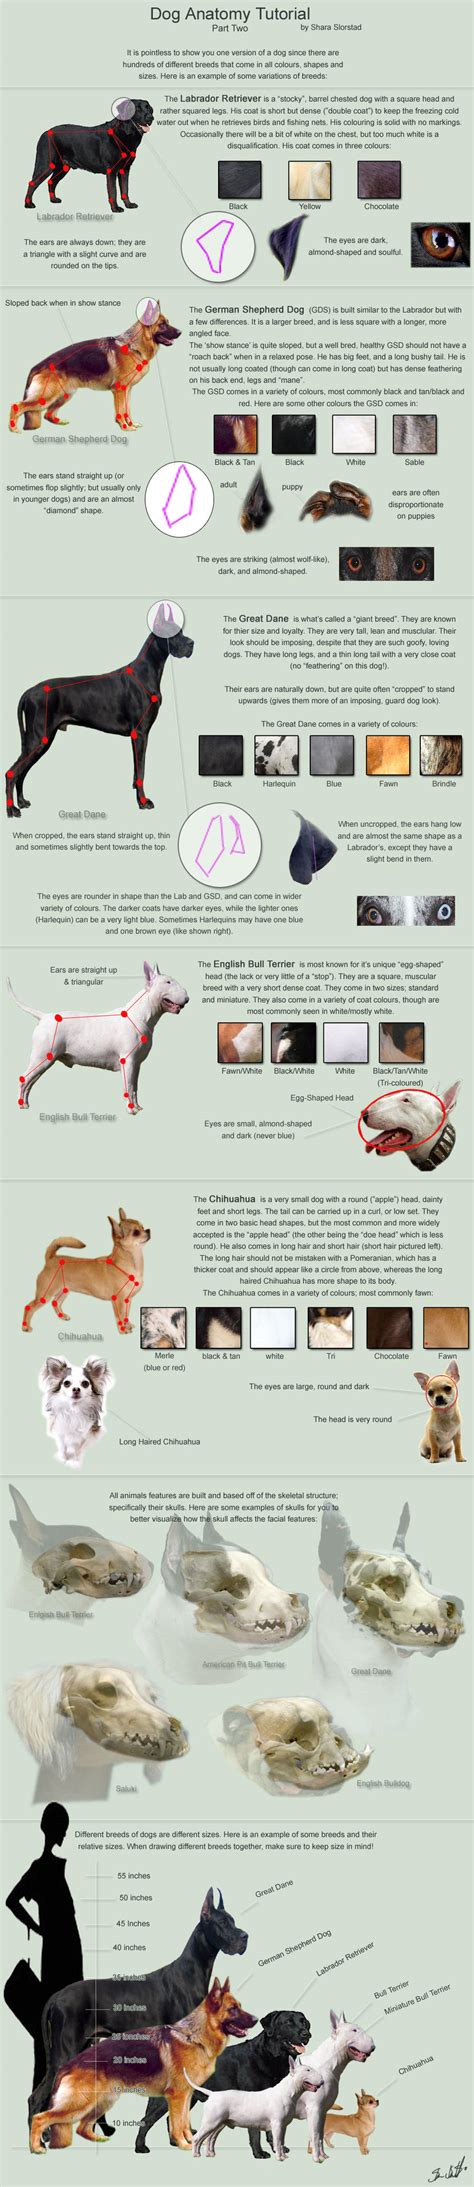 Dog Anatomy Tutorial 2 by SleepingDeadGirl on DeviantArt